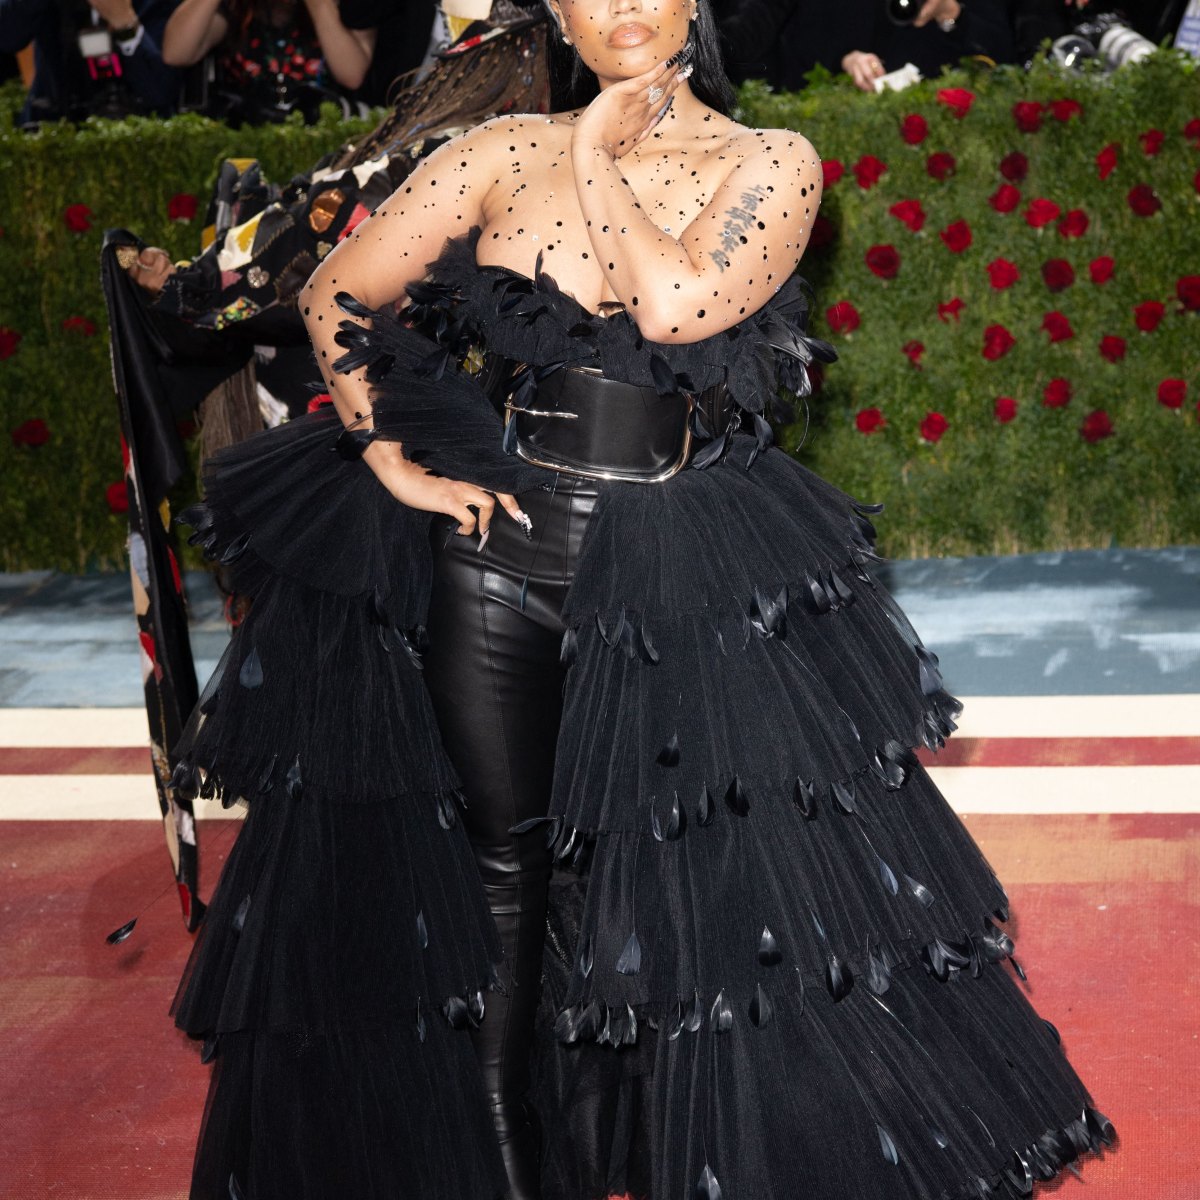 Did Nicki Minaj Get Plastic Surgery? Transformation Photos